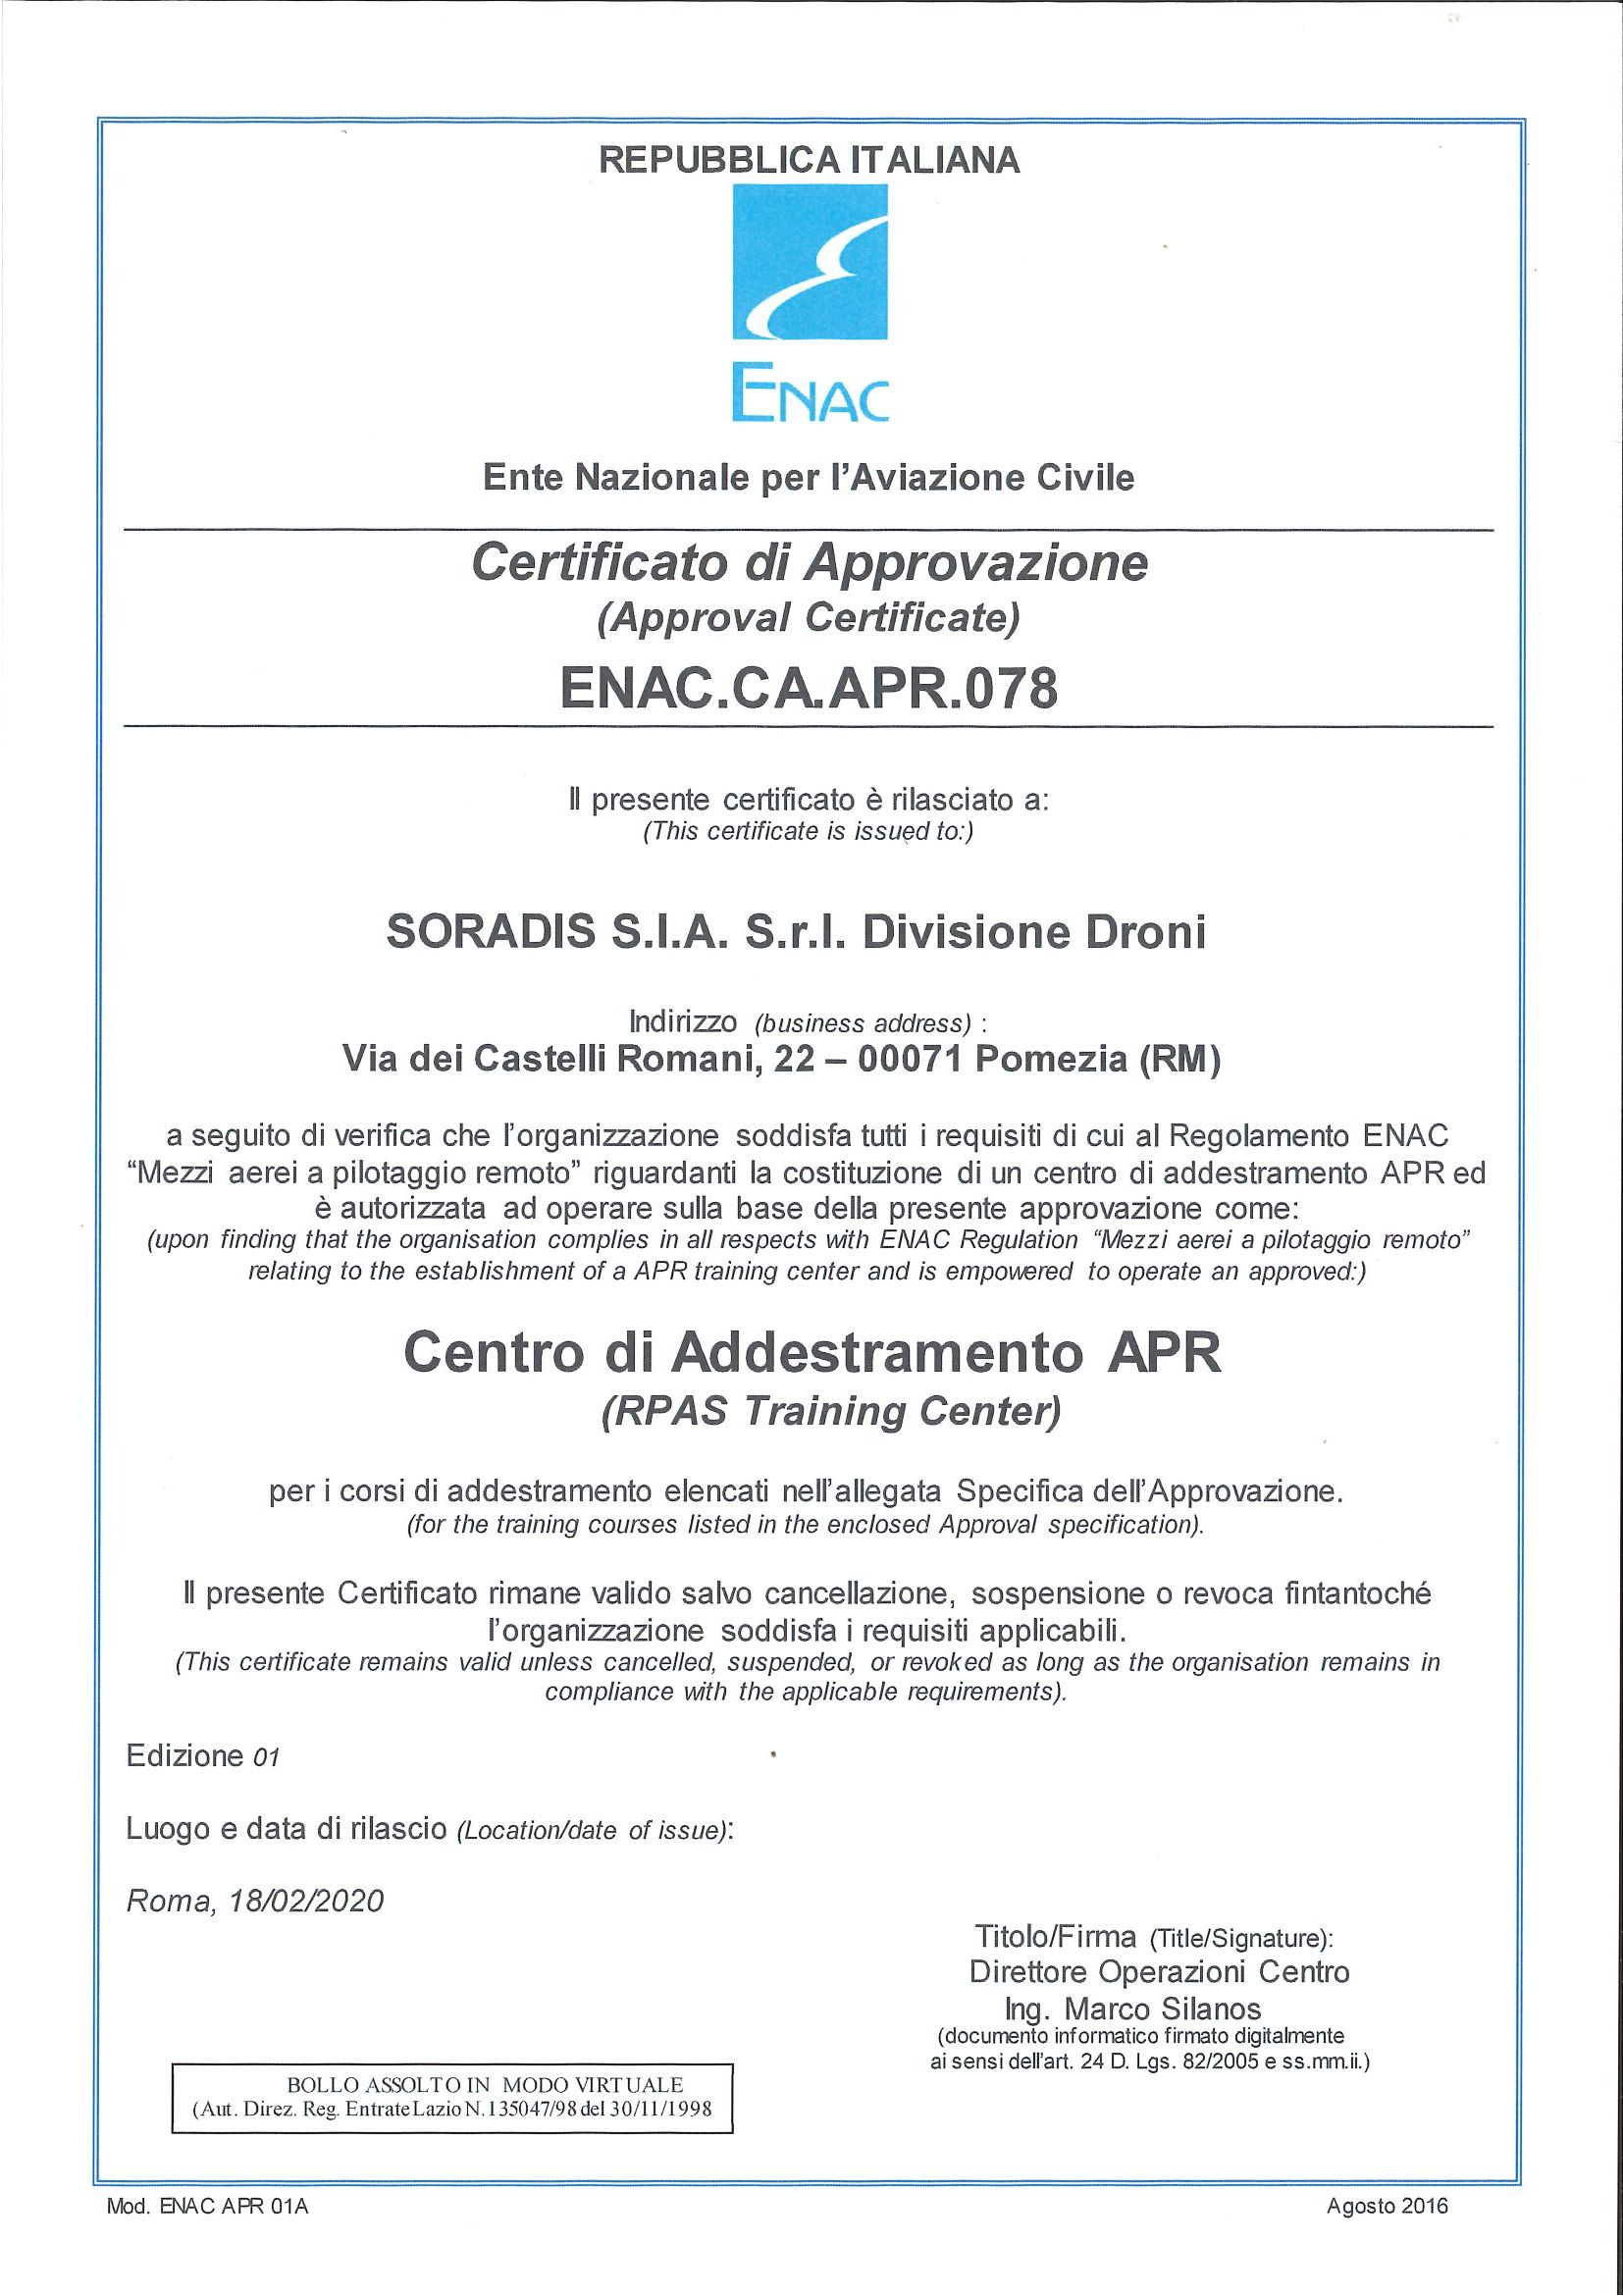 ENAC - Entità riconosciuta APR